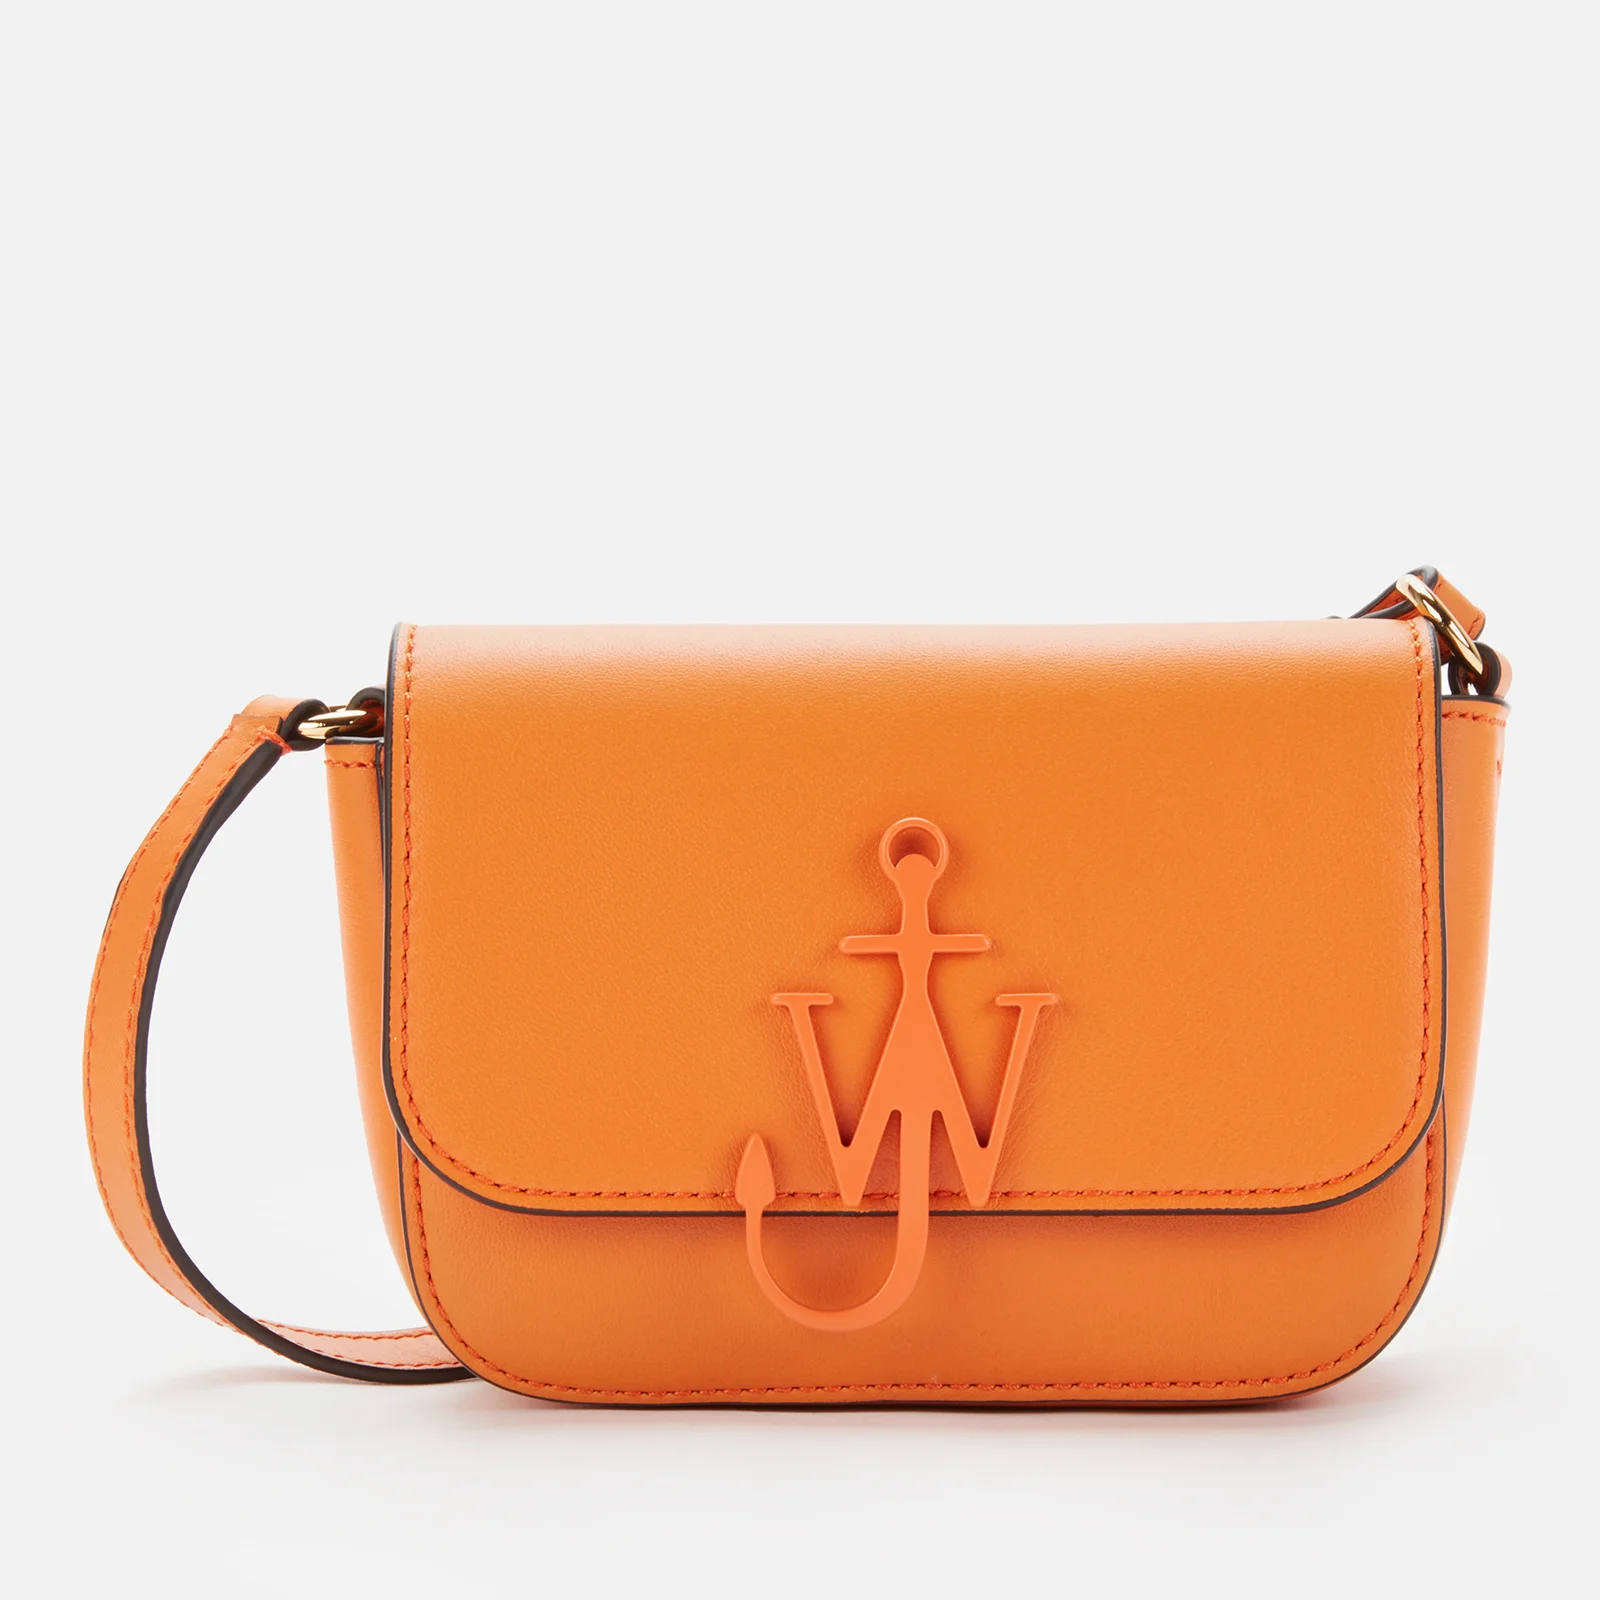 JW Anderson Women's Chain Nano Anchor Bag - Orange Image 1